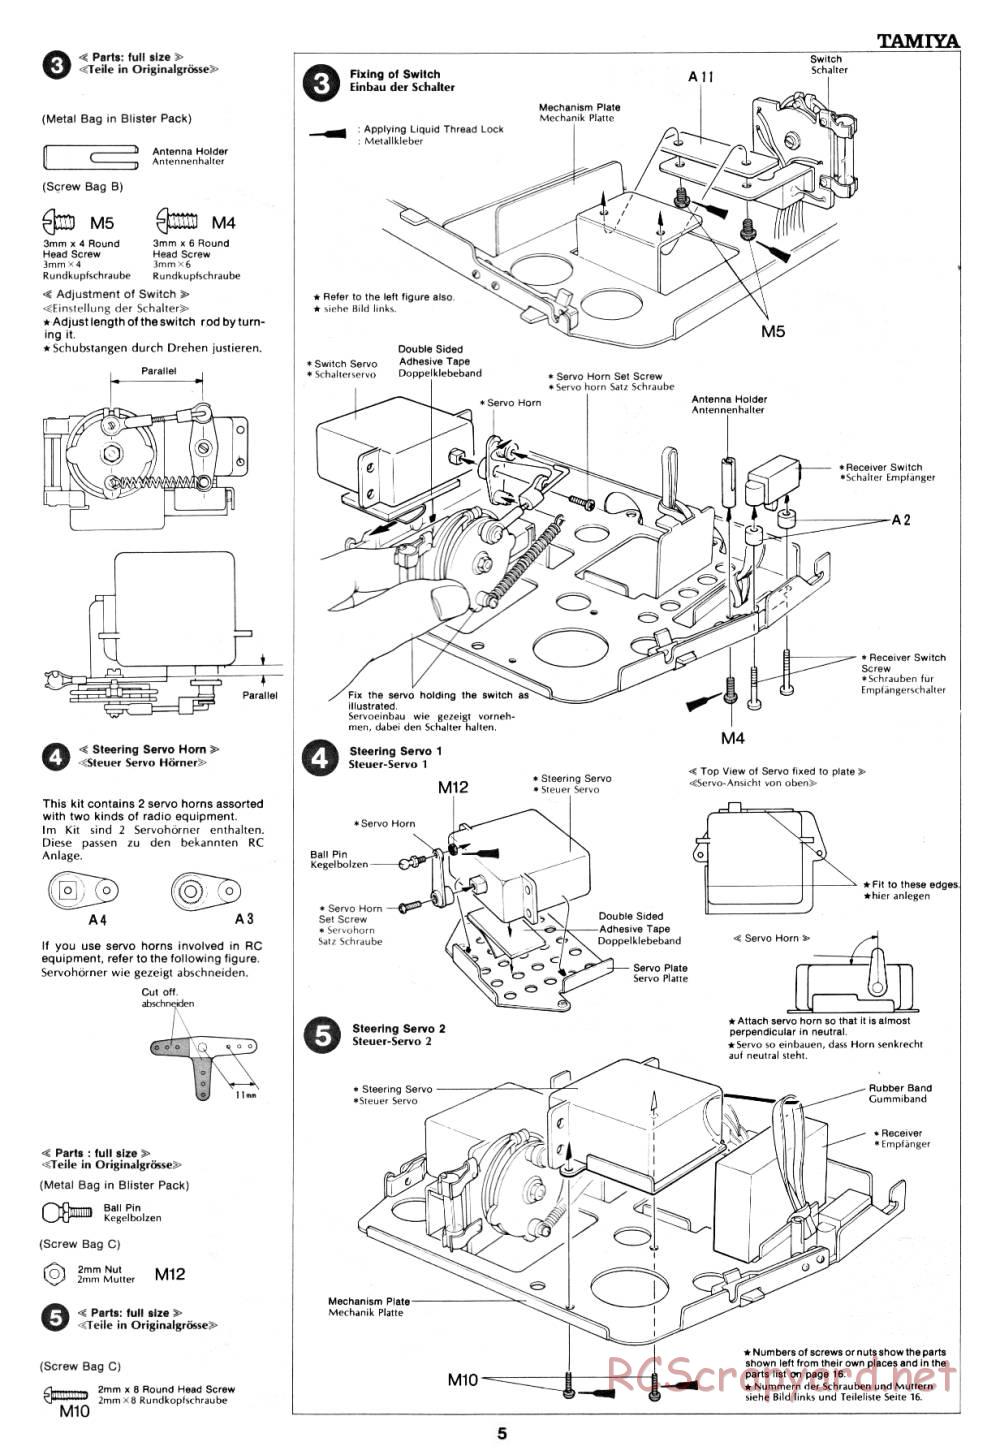 Tamiya - B2B Racing Sidecar - 58017 - Manual - Page 5